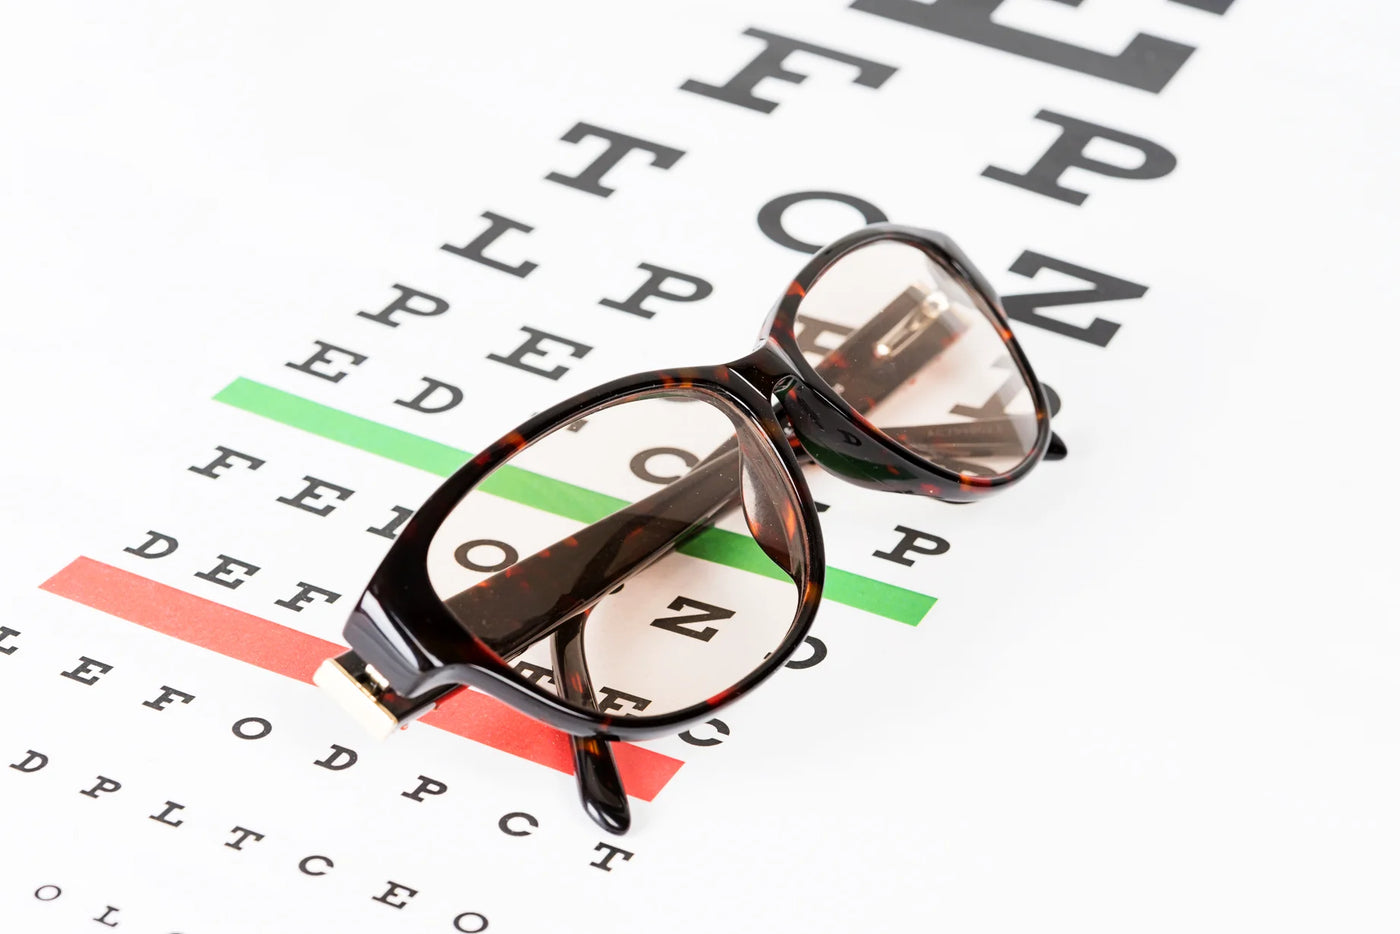 Seek Optics: Custom Sunglass Replacement Lenses & Prescription Lenses